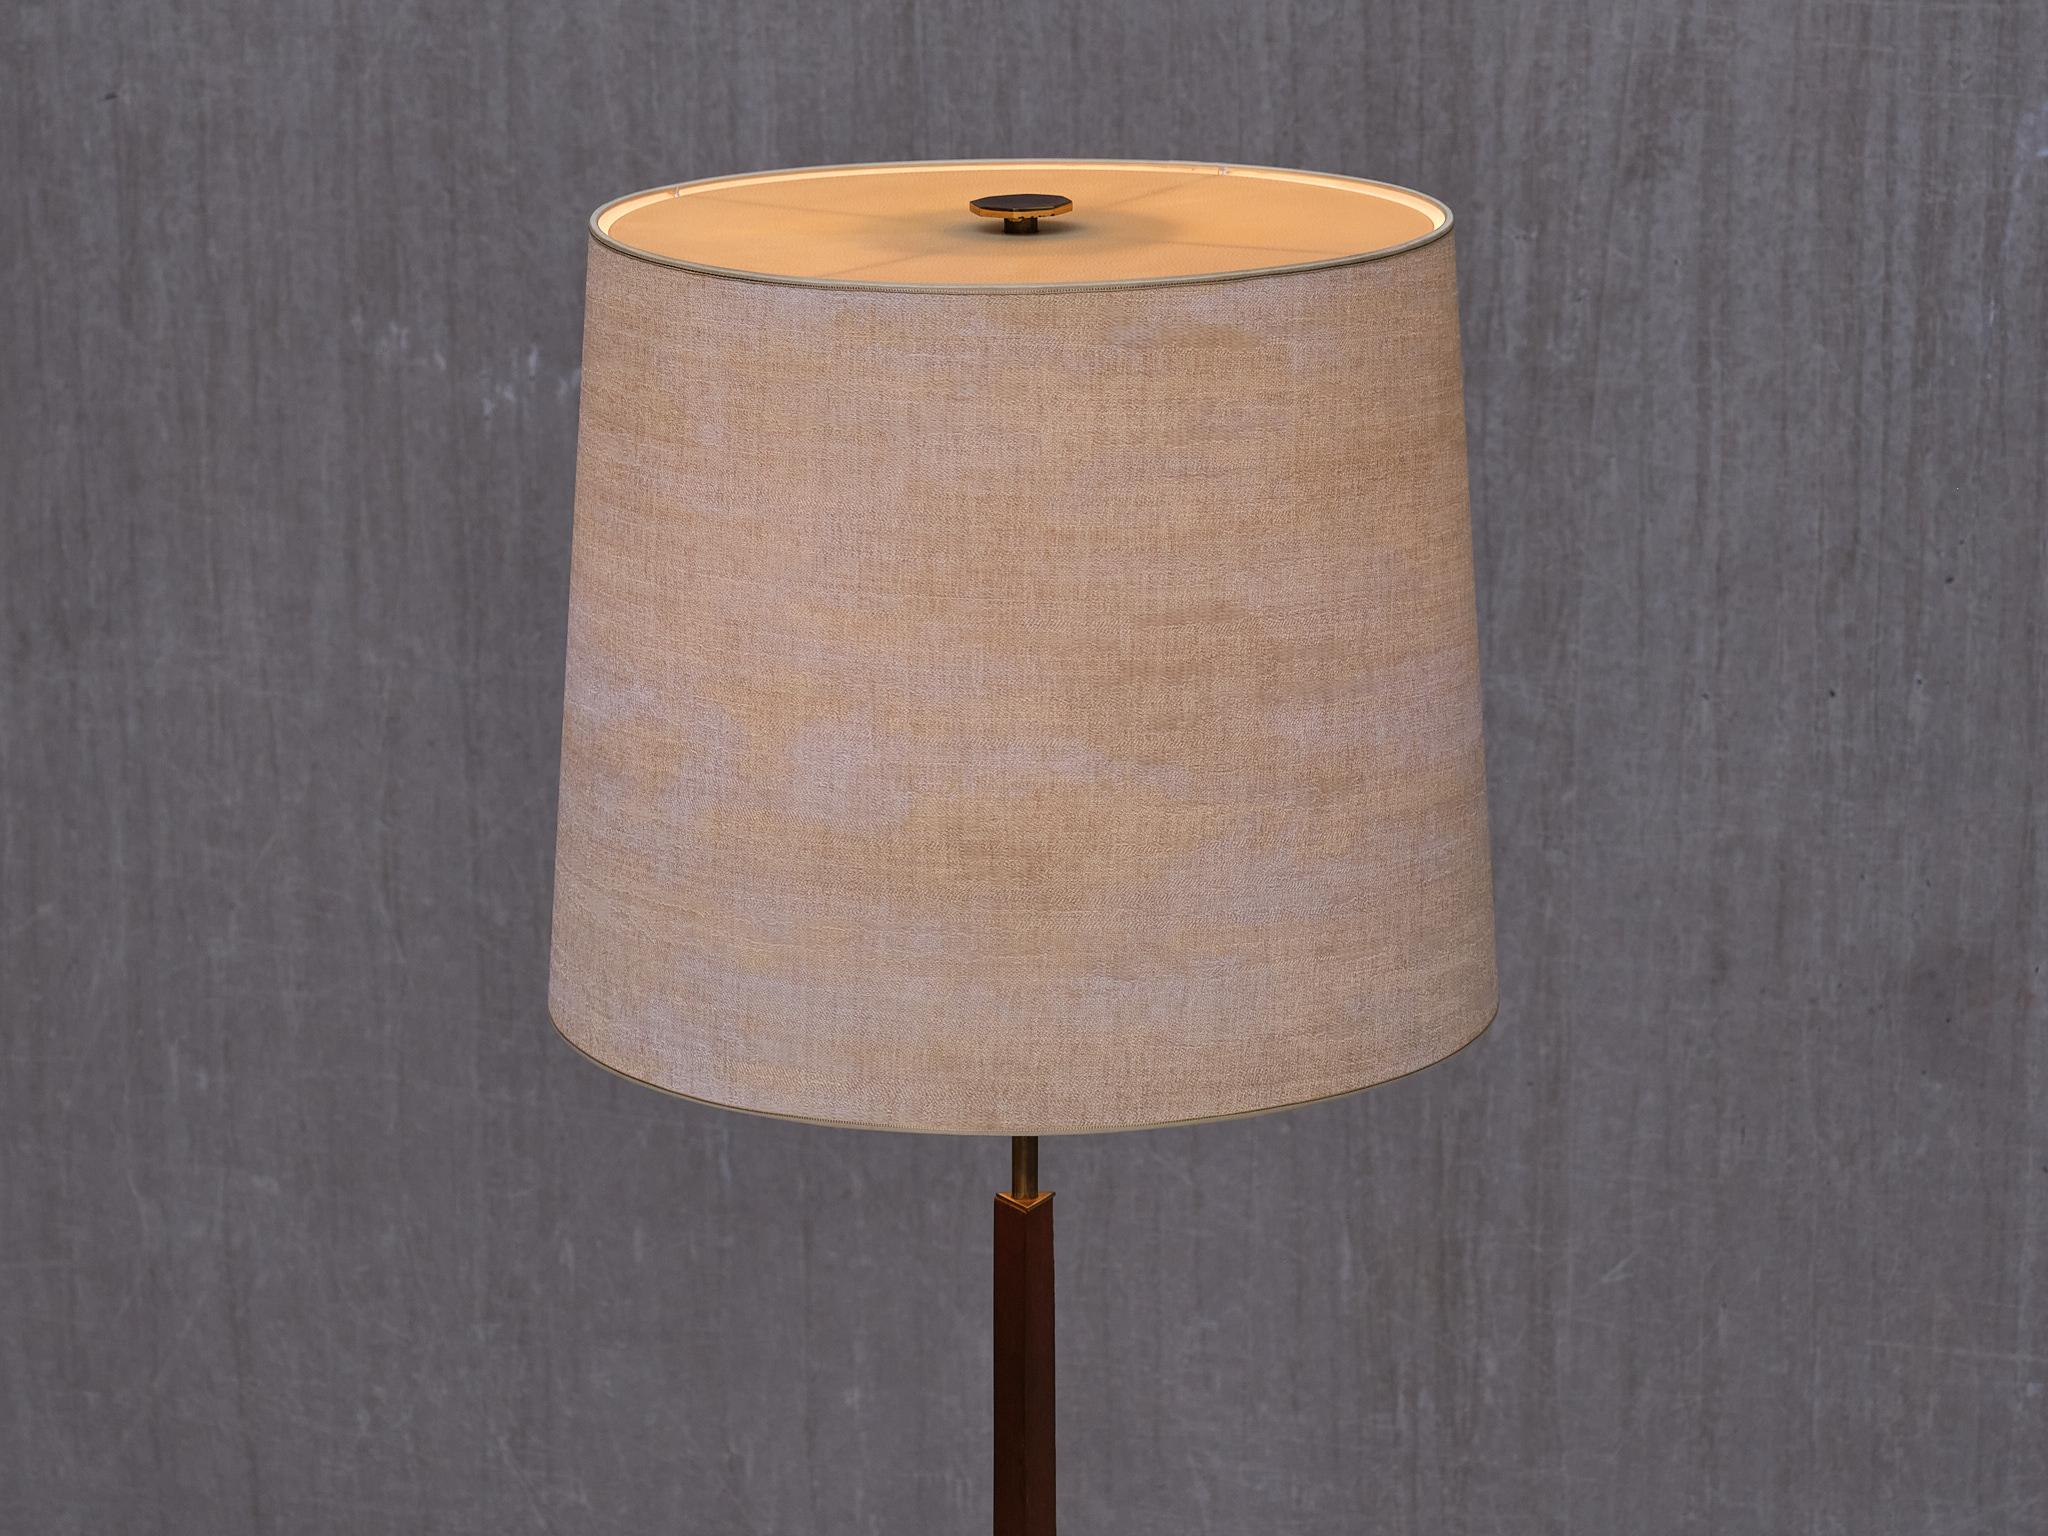 Danish Modern Three Legged Floor Lamp in Brass, Teak and Textured Shade, 1950s For Sale 7